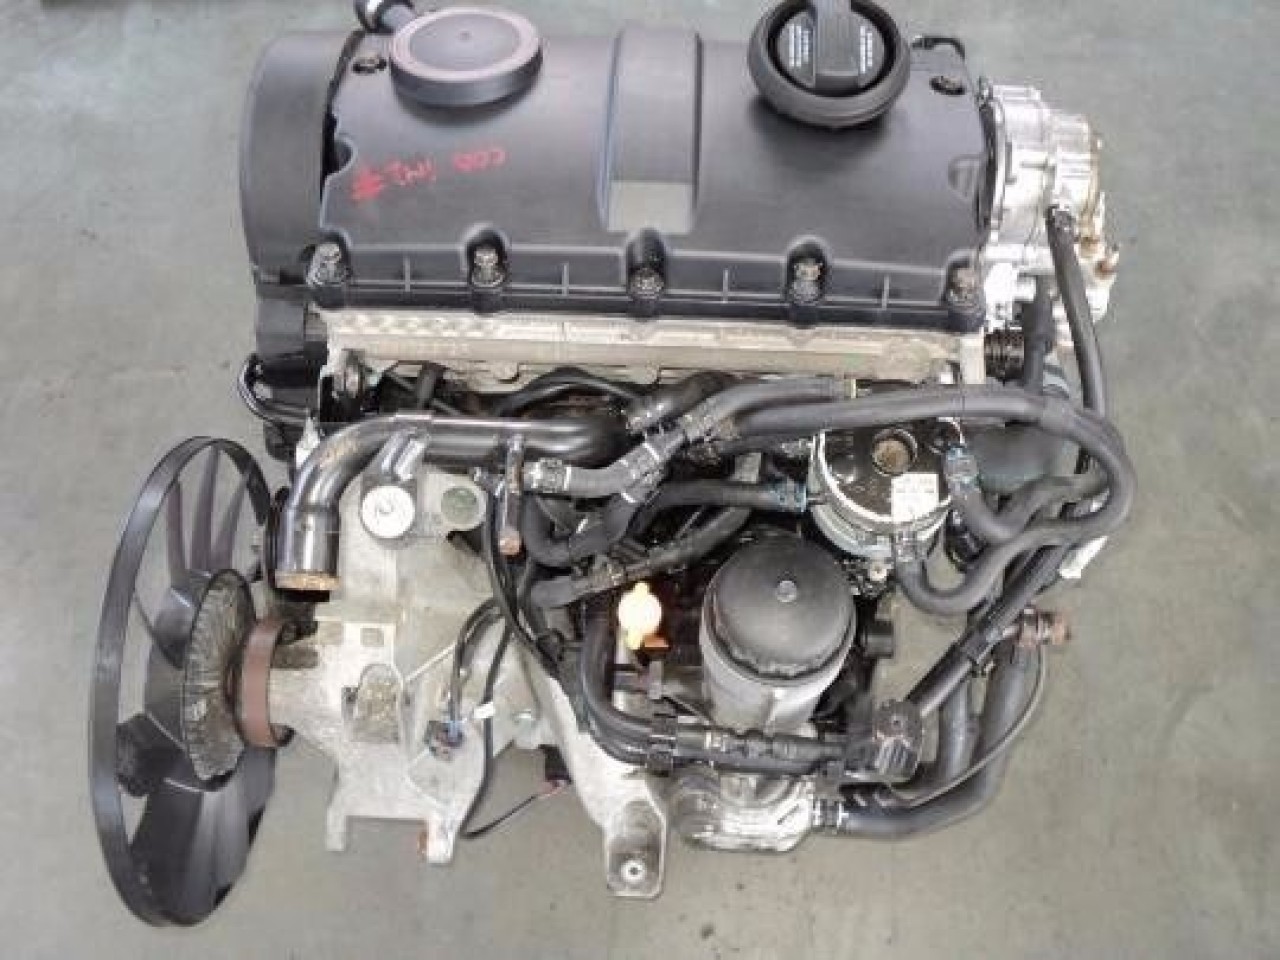 Volkswagen 1.9 двигатель. Двигатель 1.9 TDI (AVF, AUY, BXE, AJM). Двигатель AVF 1.9 TDI. Мотор Пассат б5 1.9 тди. Двигатель AJM 1.9 TDI.